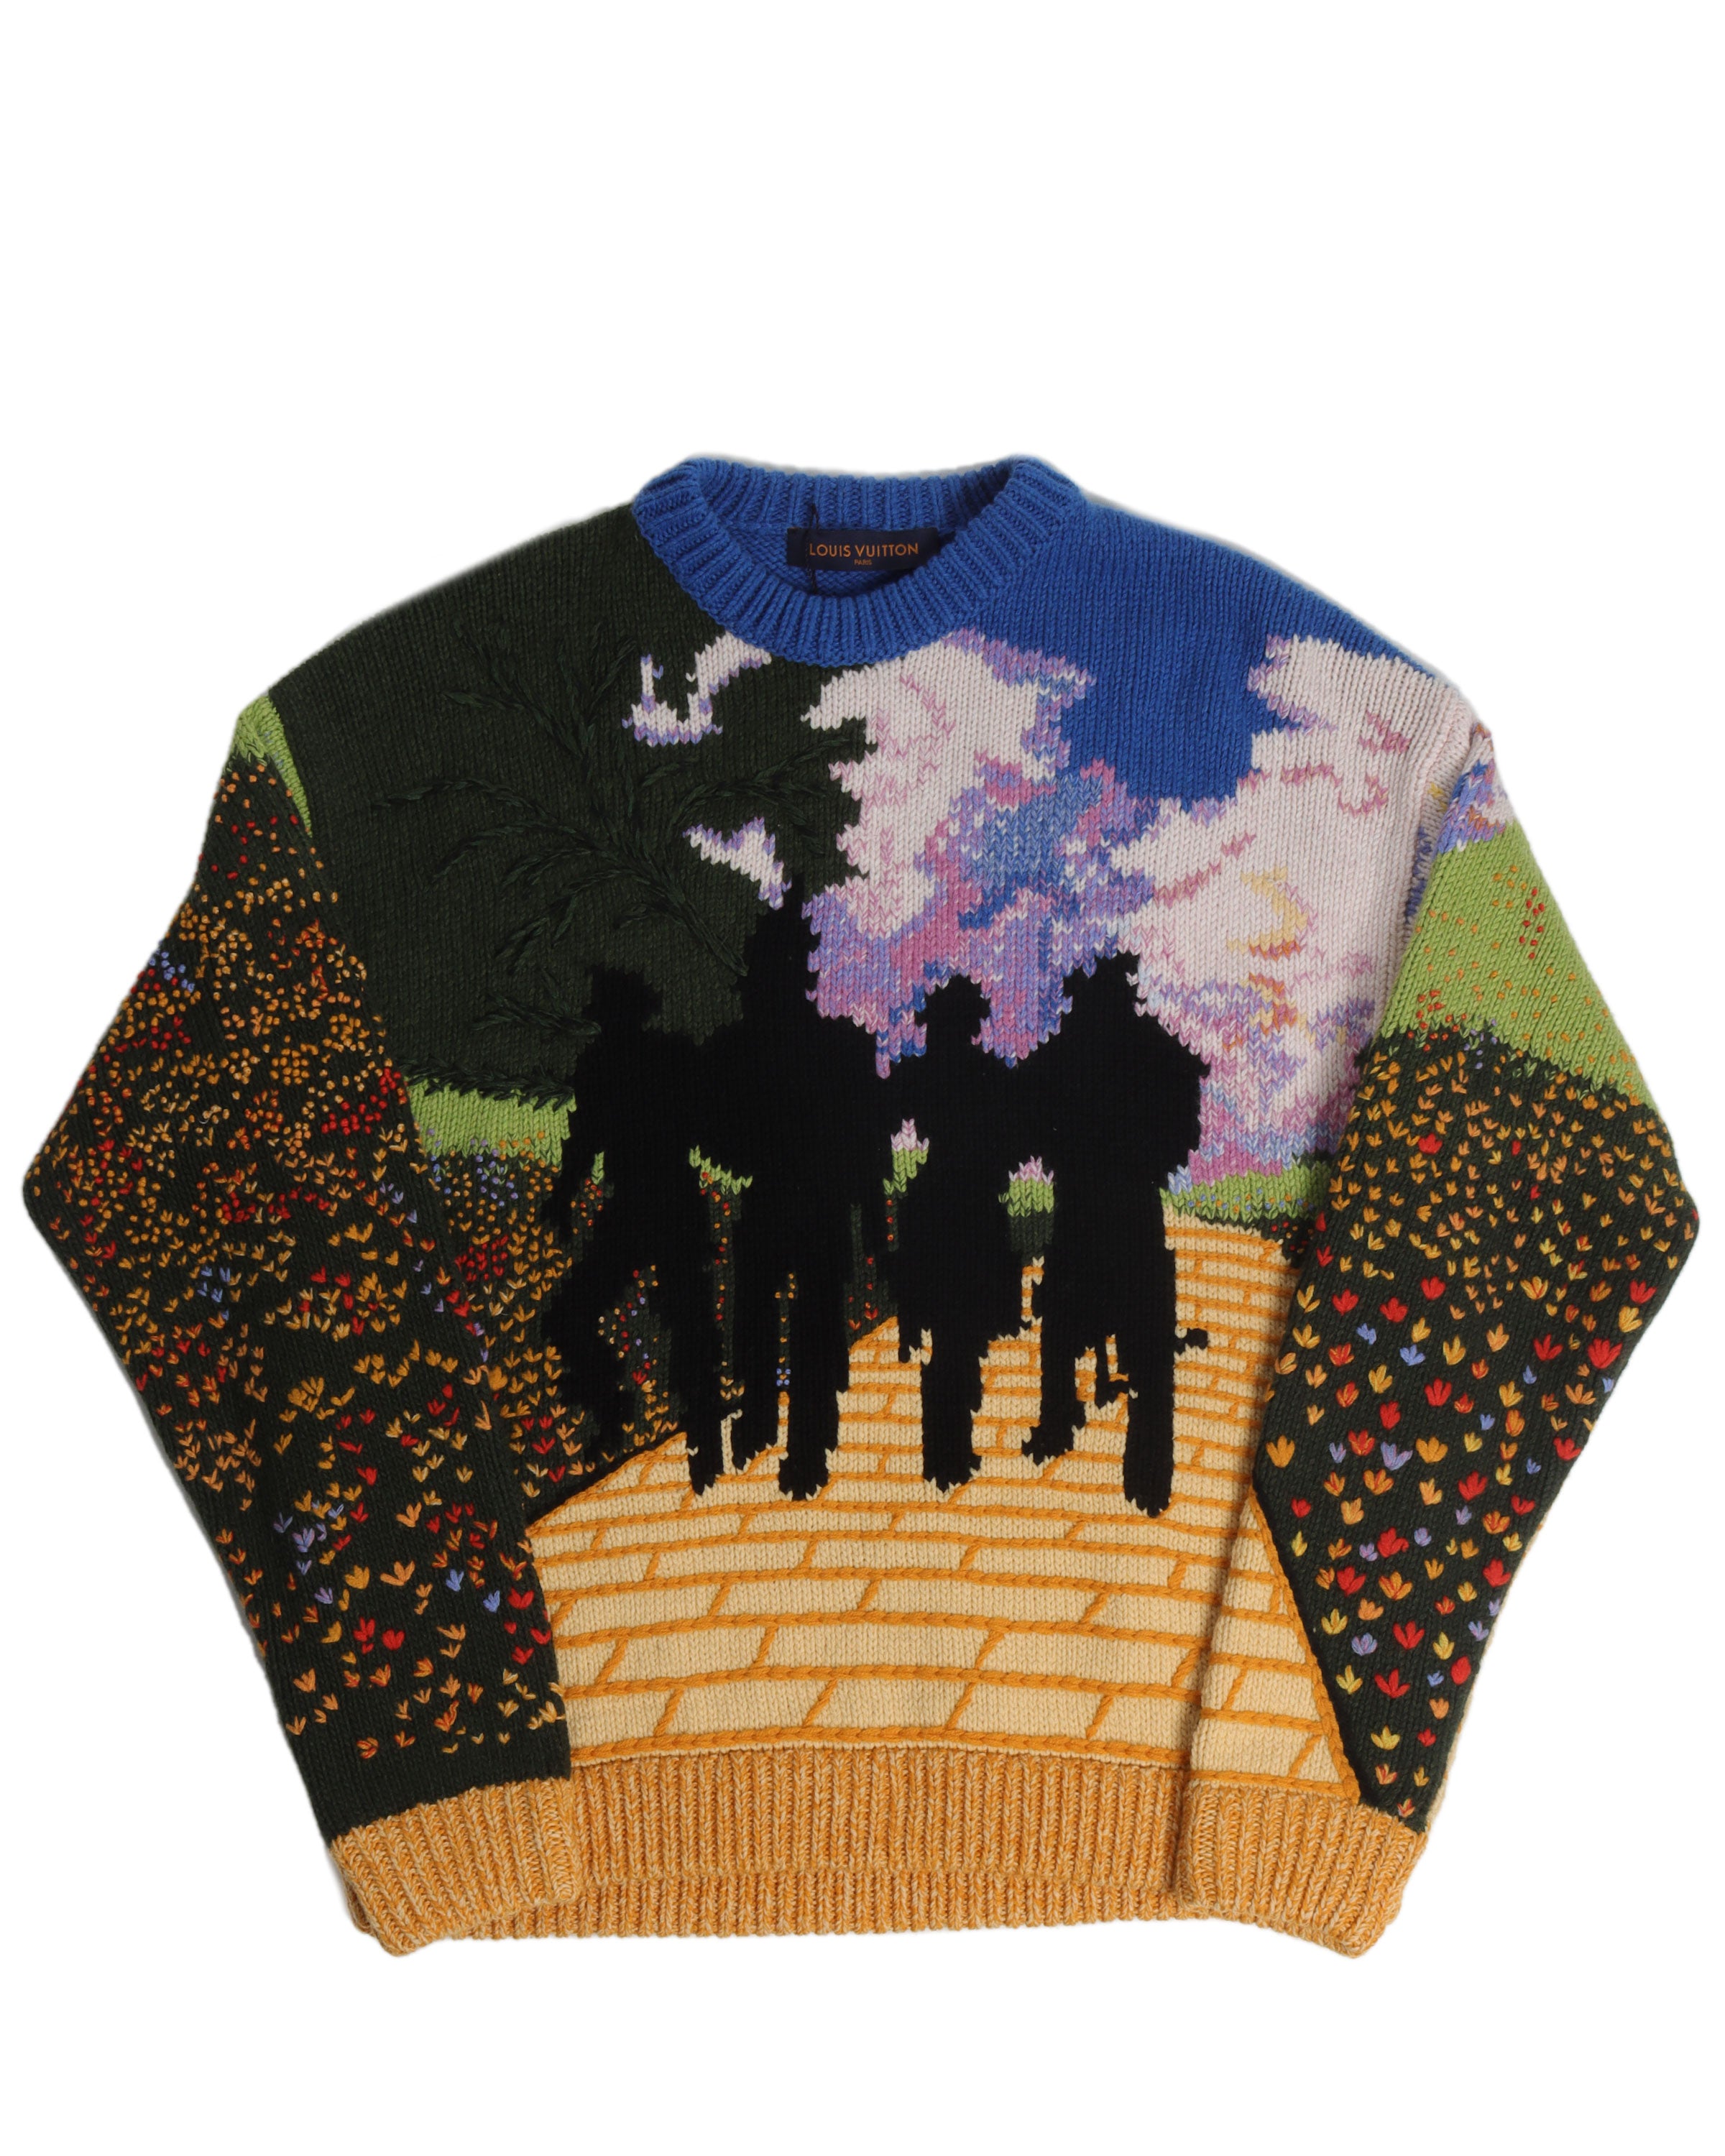 Louis Vuitton Visit oz Scarecrow Sweatshirt